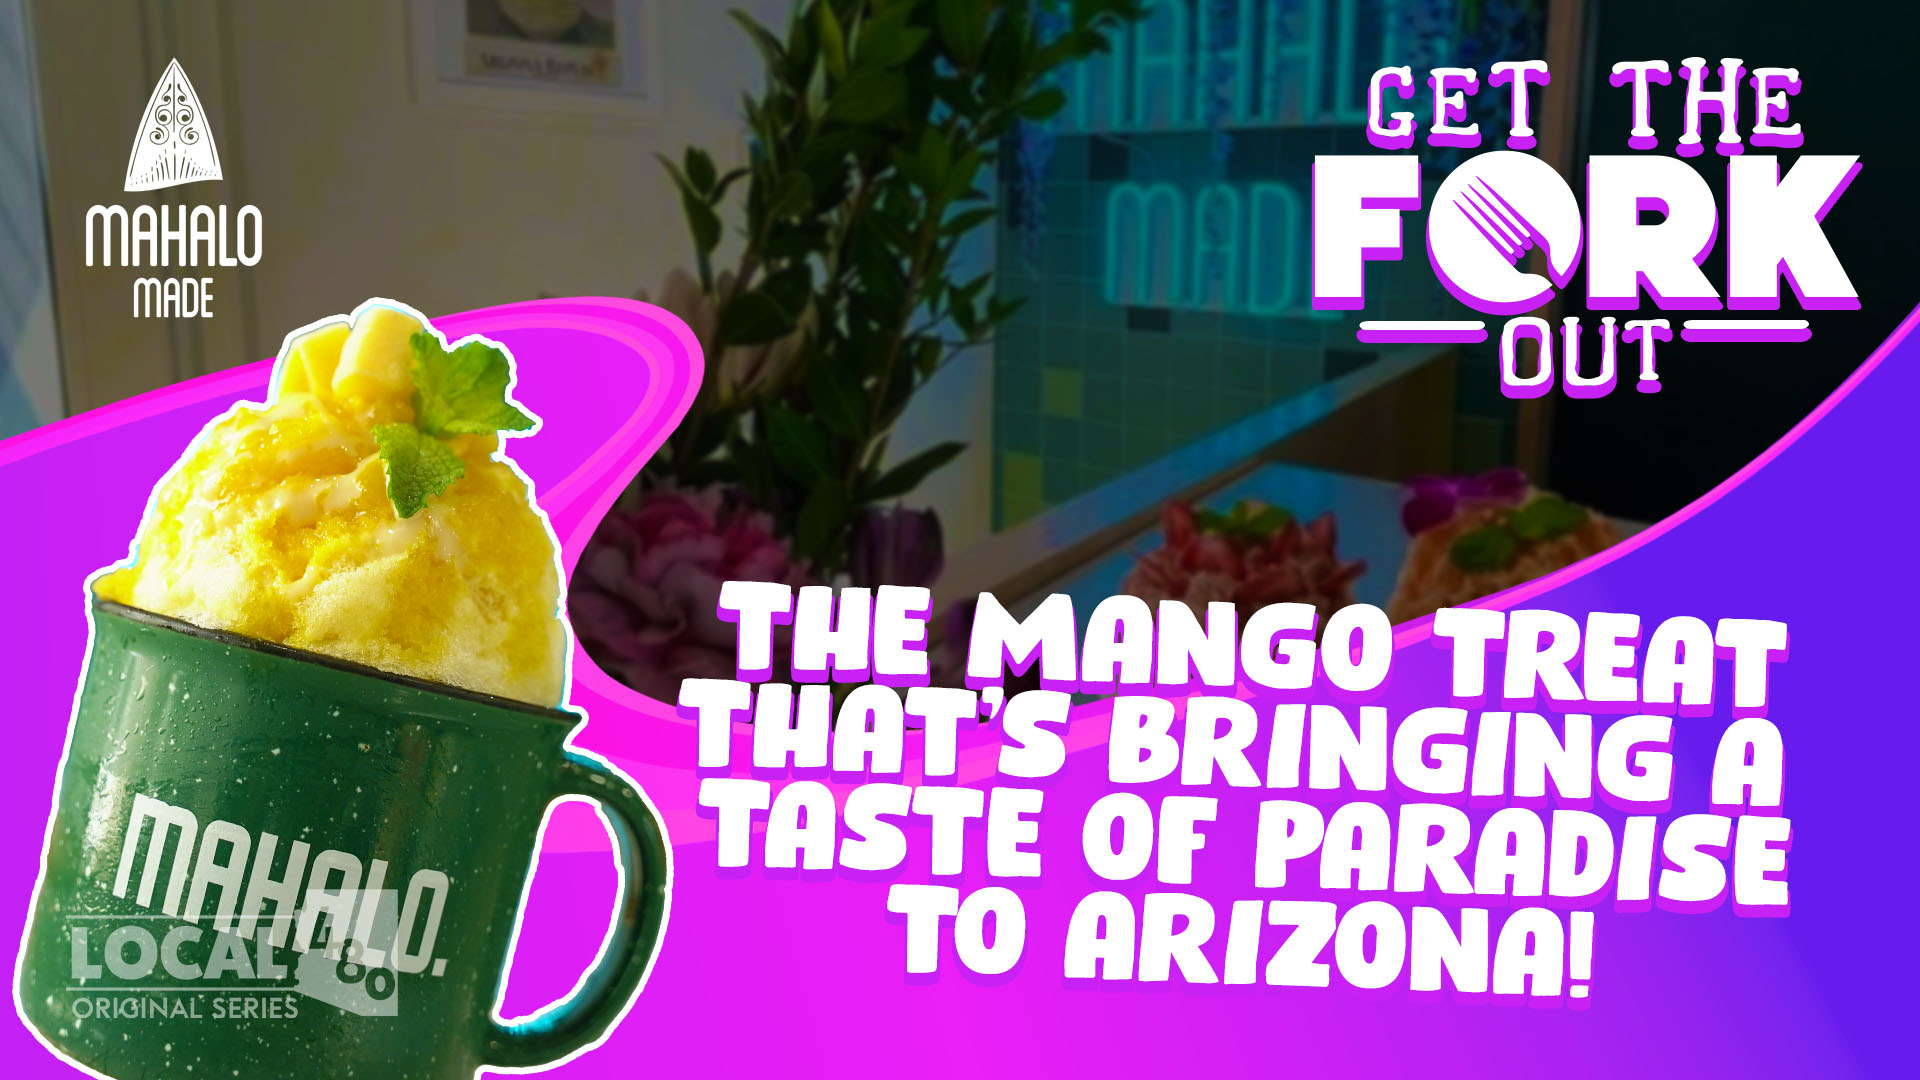 The Mango Treat That’s Bringing A Taste of Paradise to Arizona!